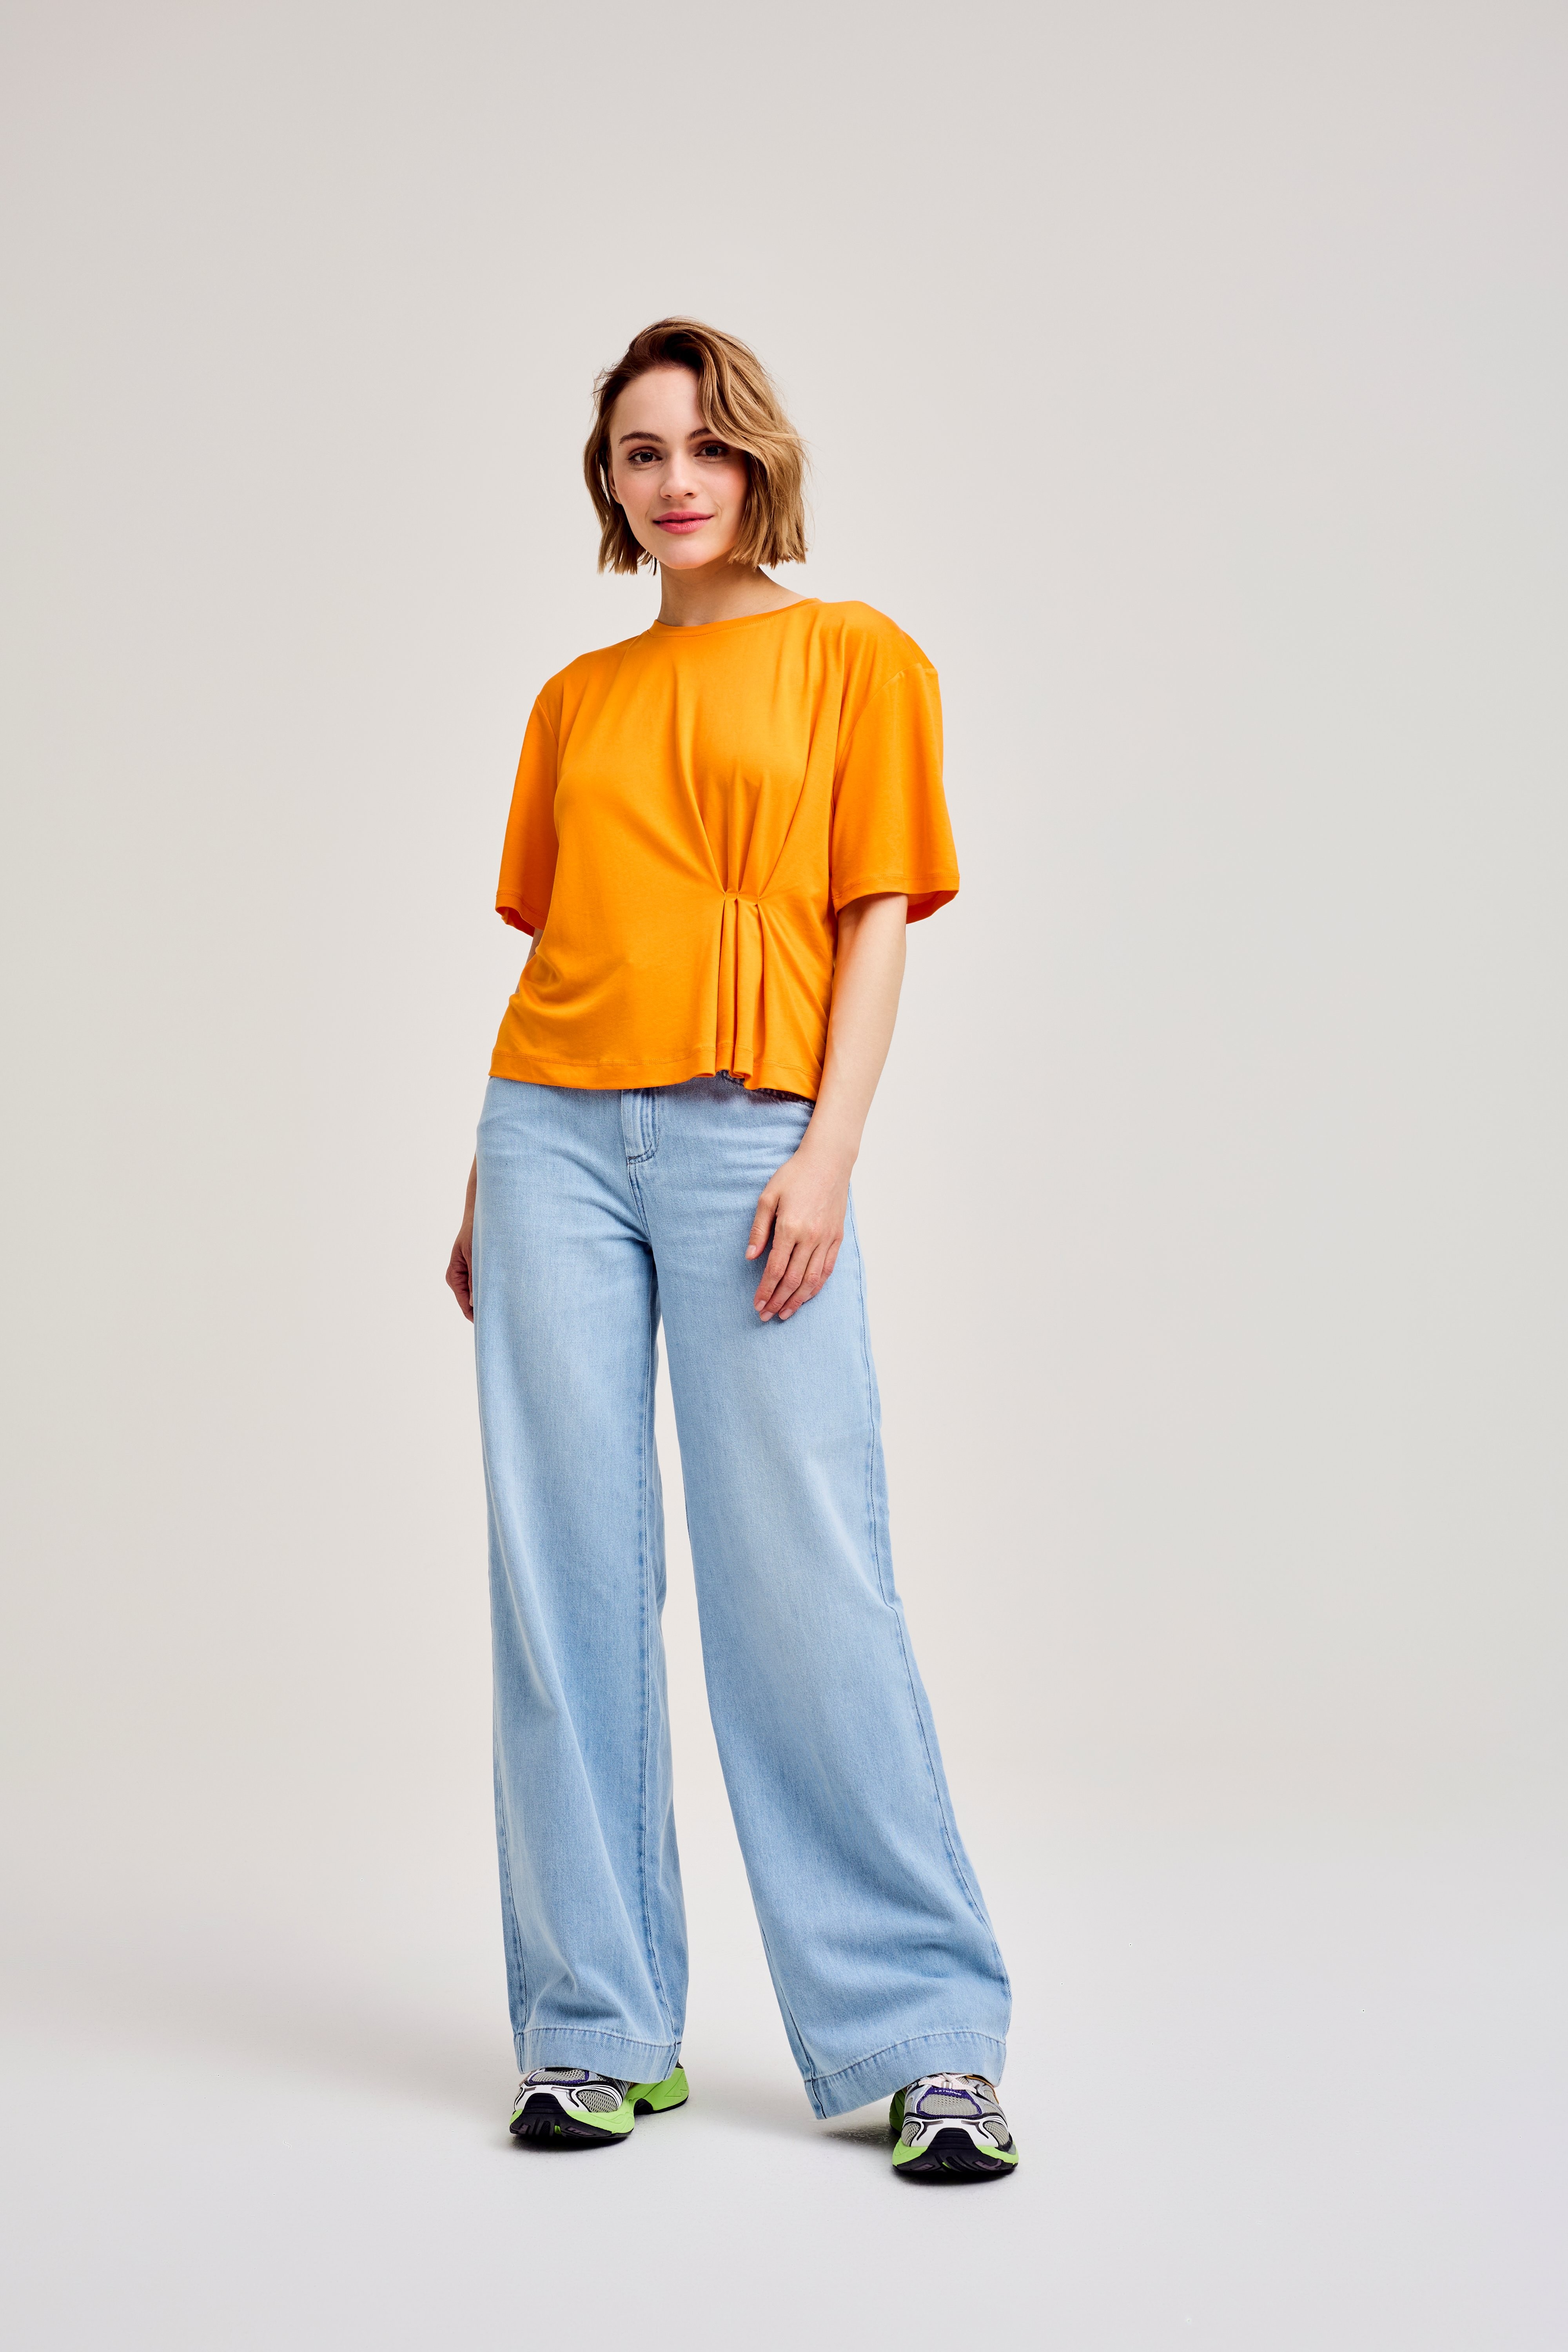 CKS Dames - TWIST - t-shirt korte mouwen - intens oranje